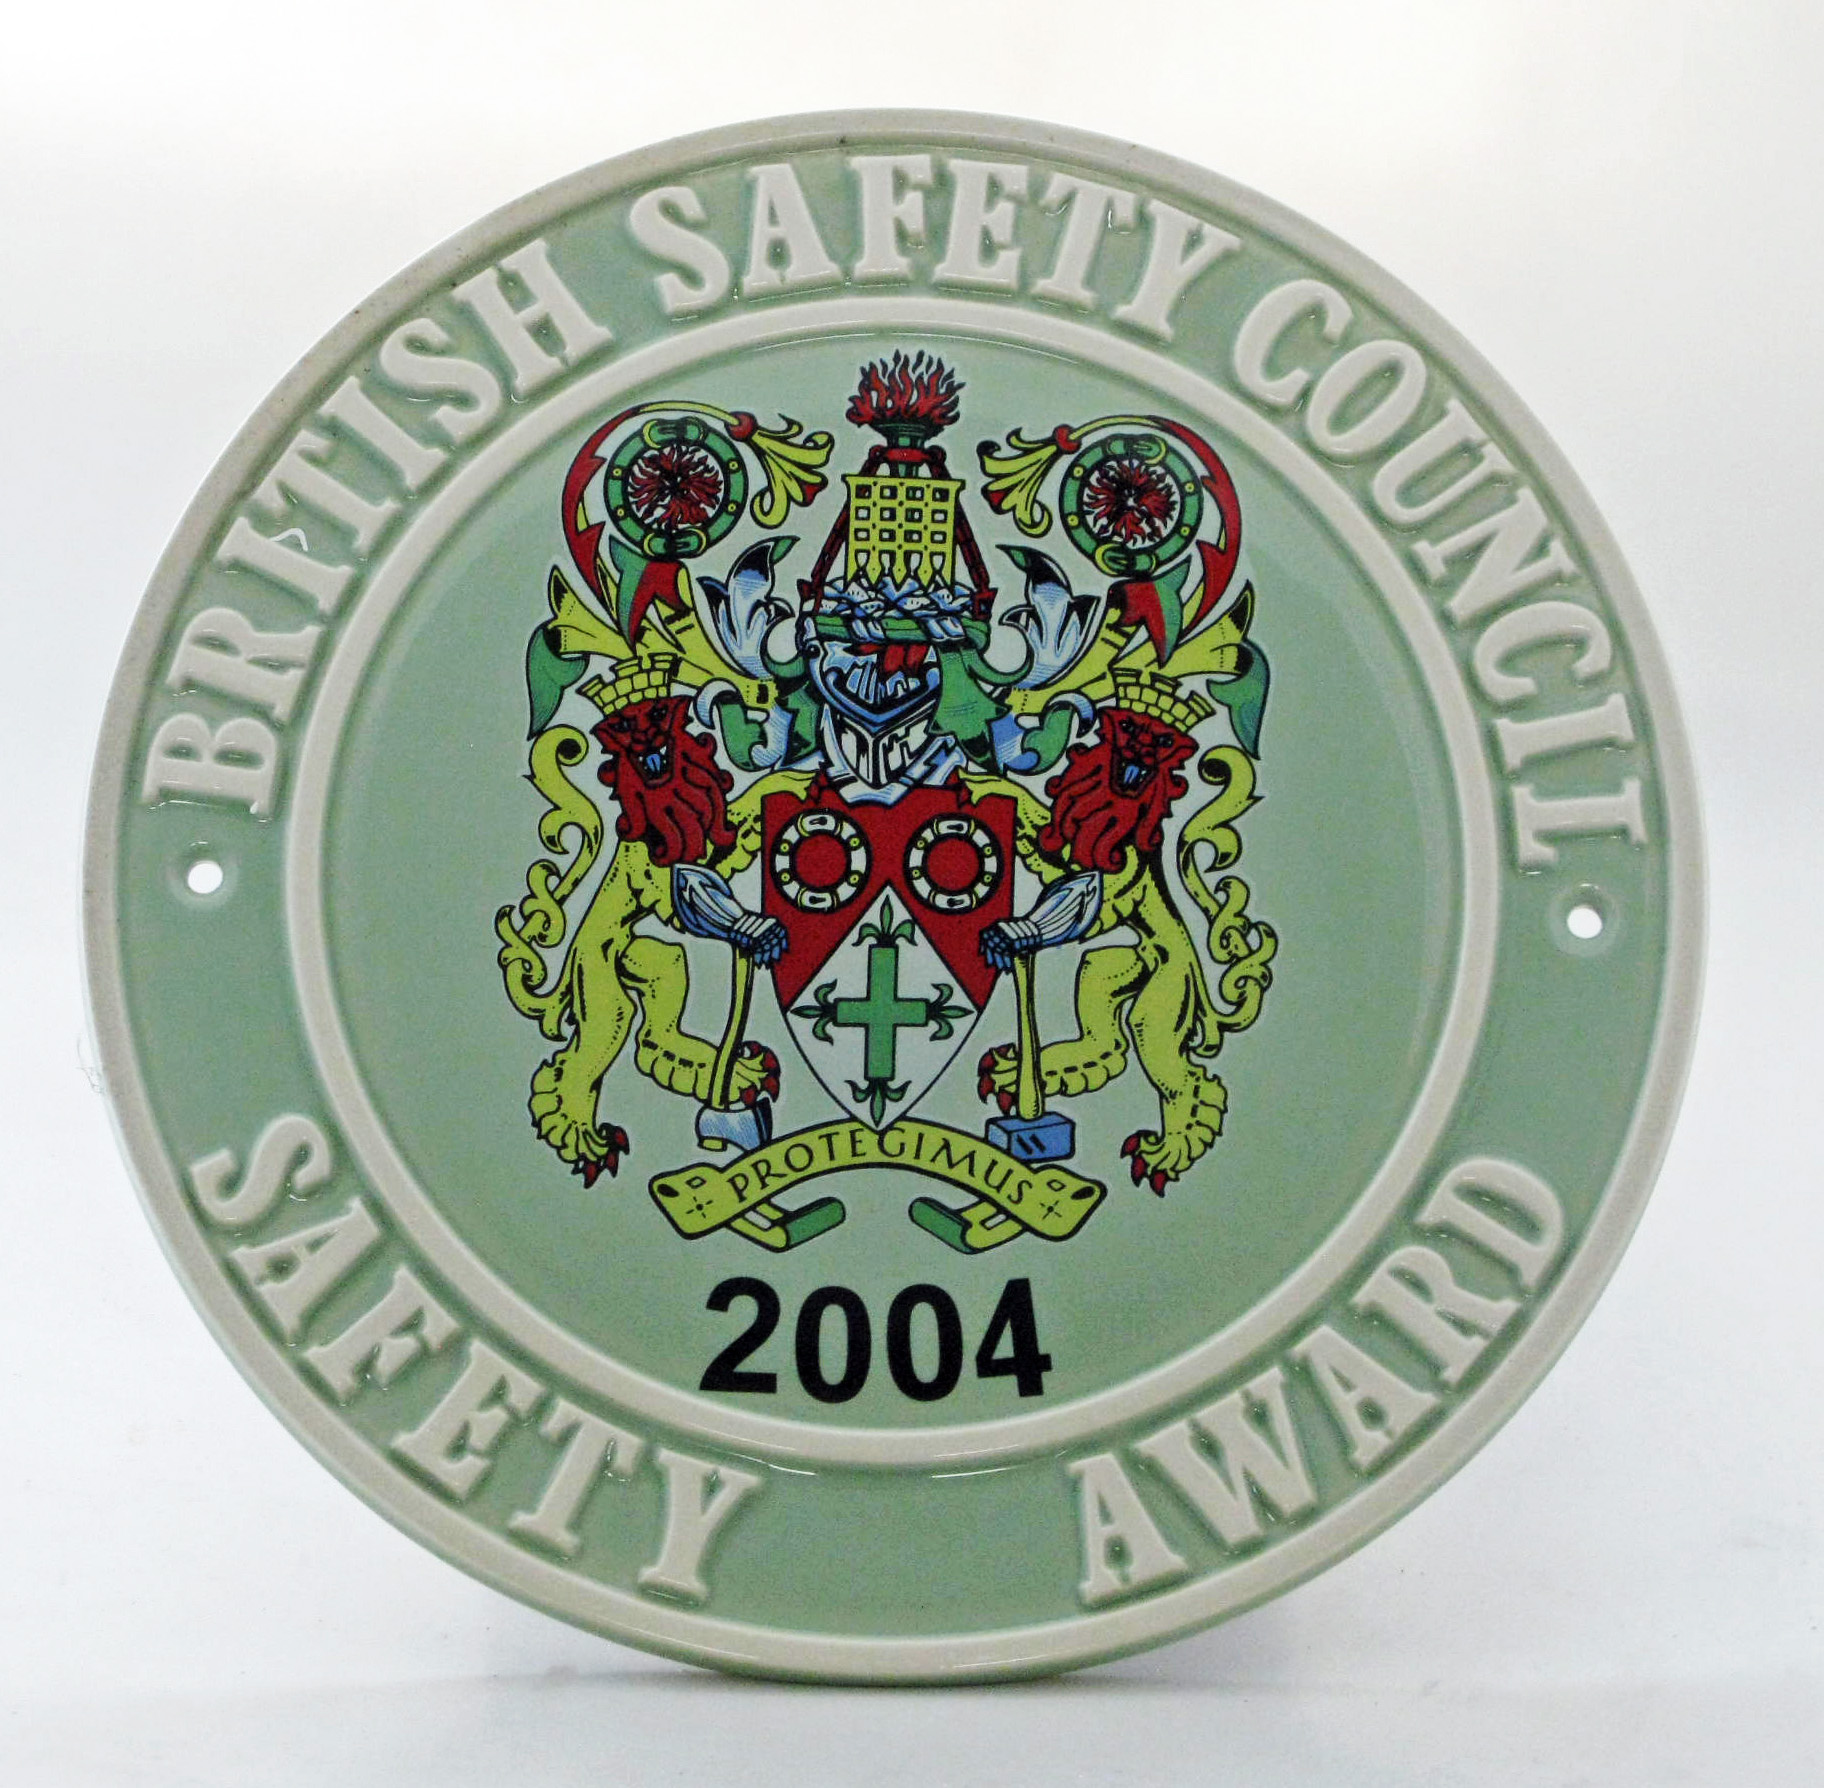 2004 Safety Award Plaque